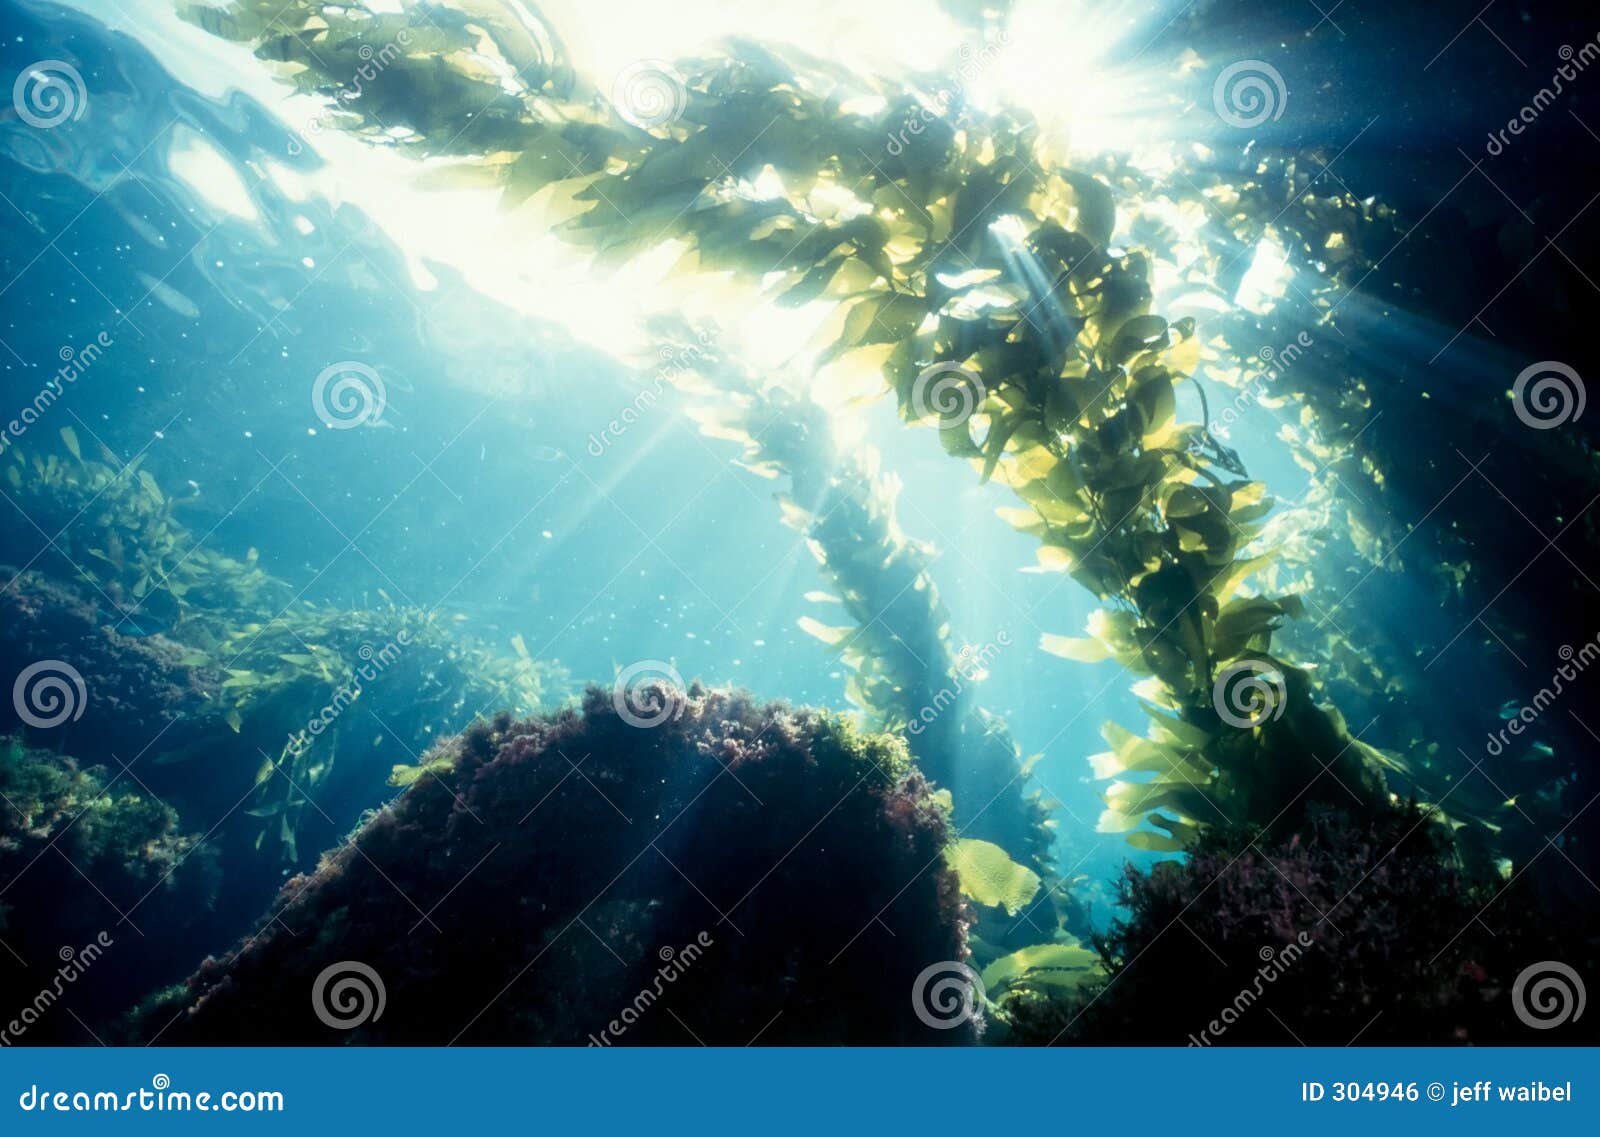 kelp forest sunshine